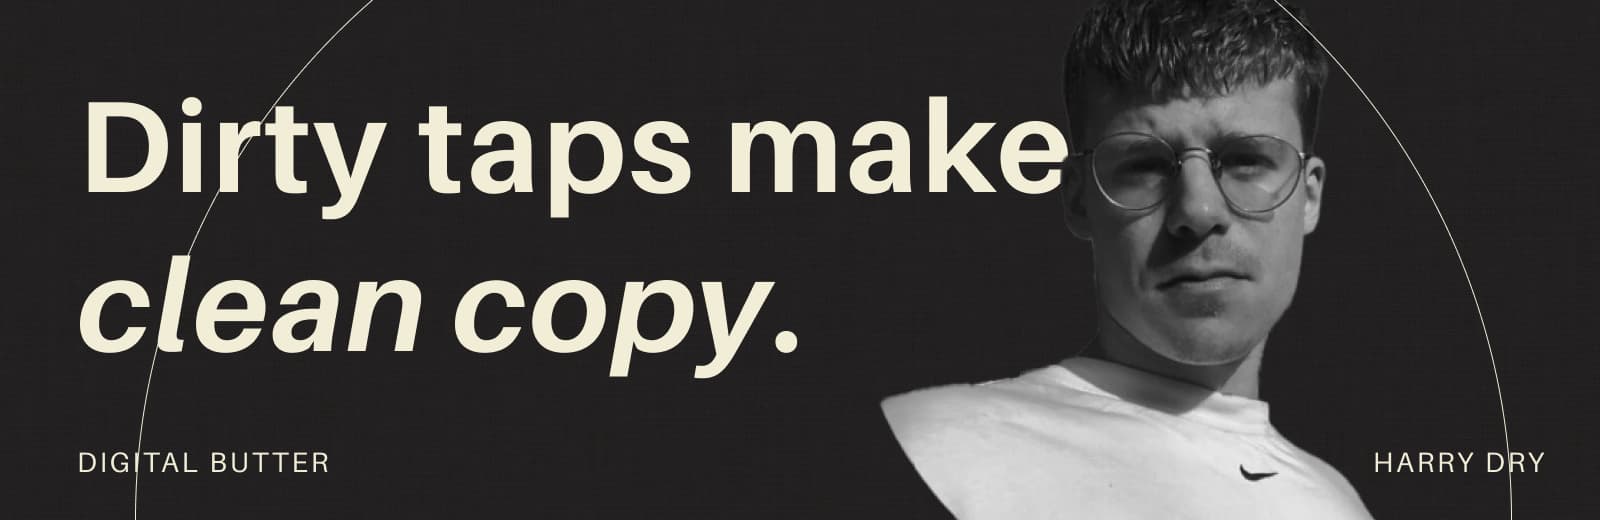 copywriting tips open dirty taps